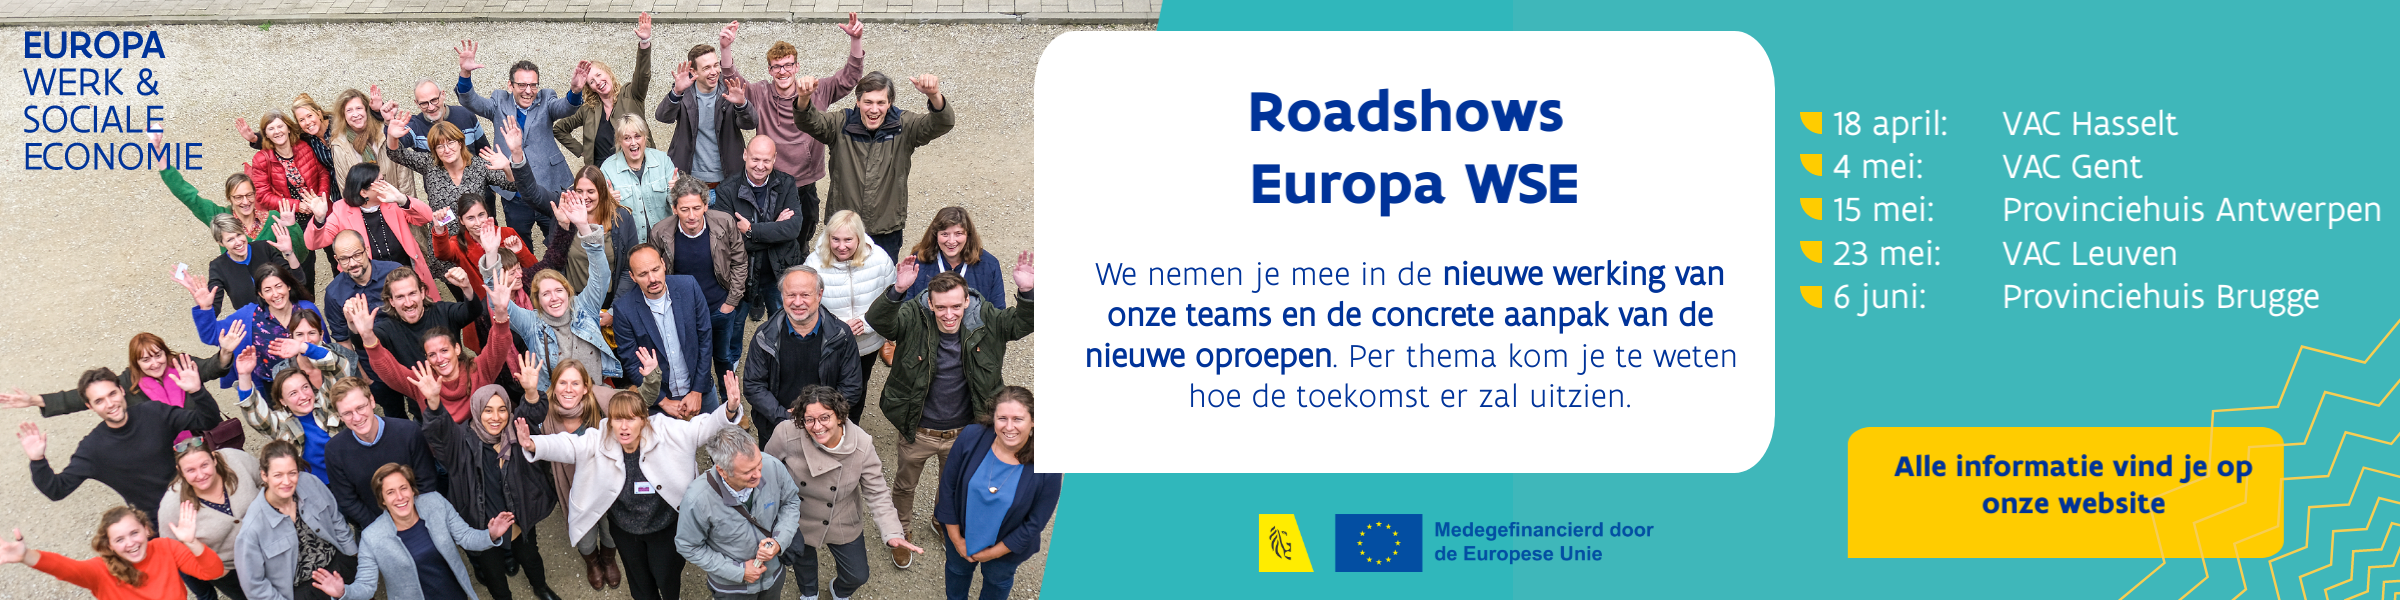 roadshows Europa WSE